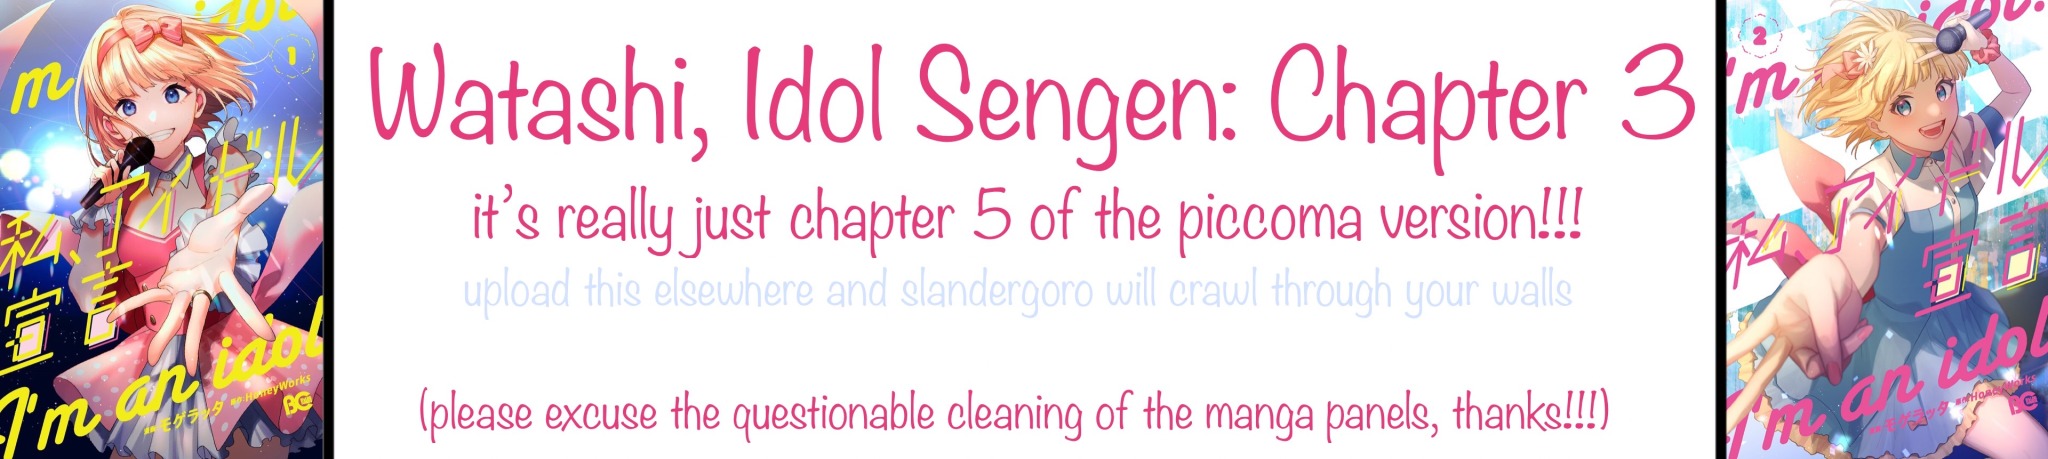 Watashi, Idol Sengen Chapter 3 #1